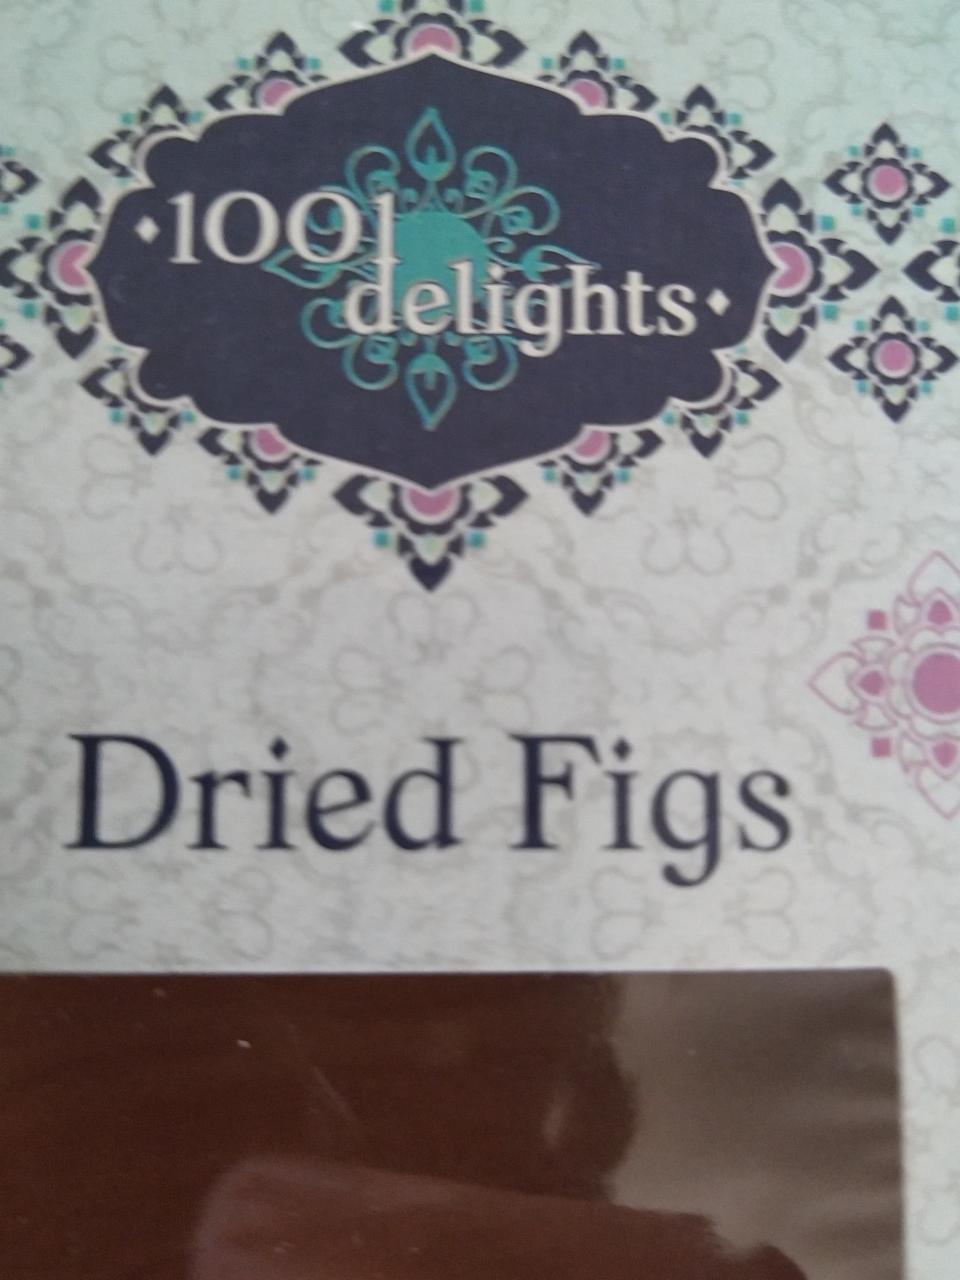 Fotografie - Dried Figs 1001 delights